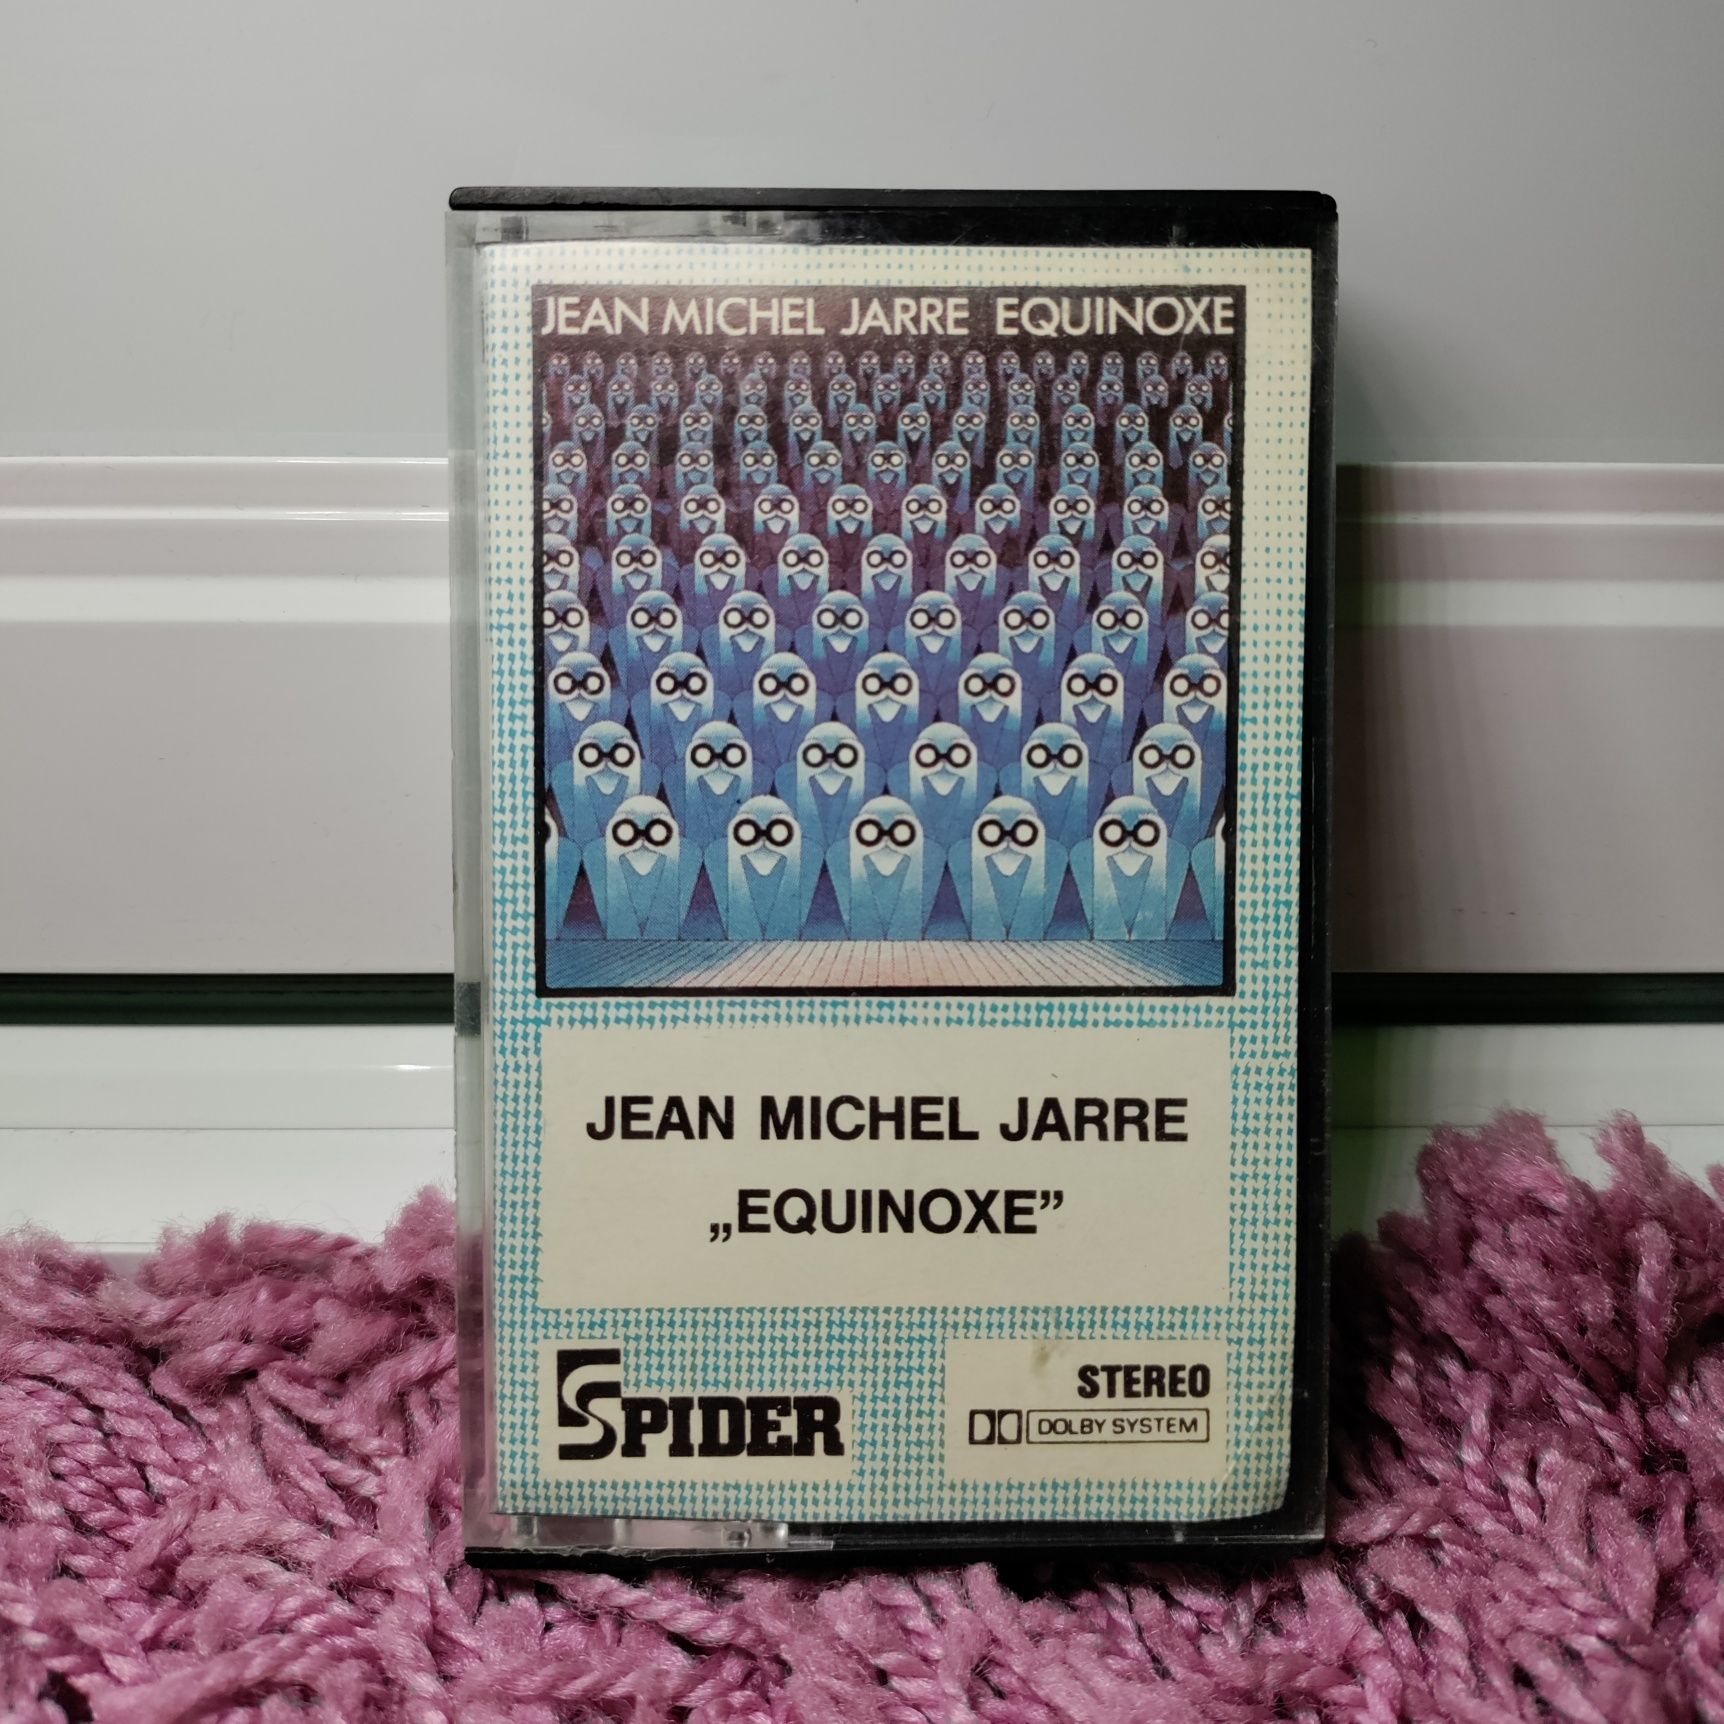 Kaseta magnetofonowa Jean Michel Jarre Equinoxe kolekcja